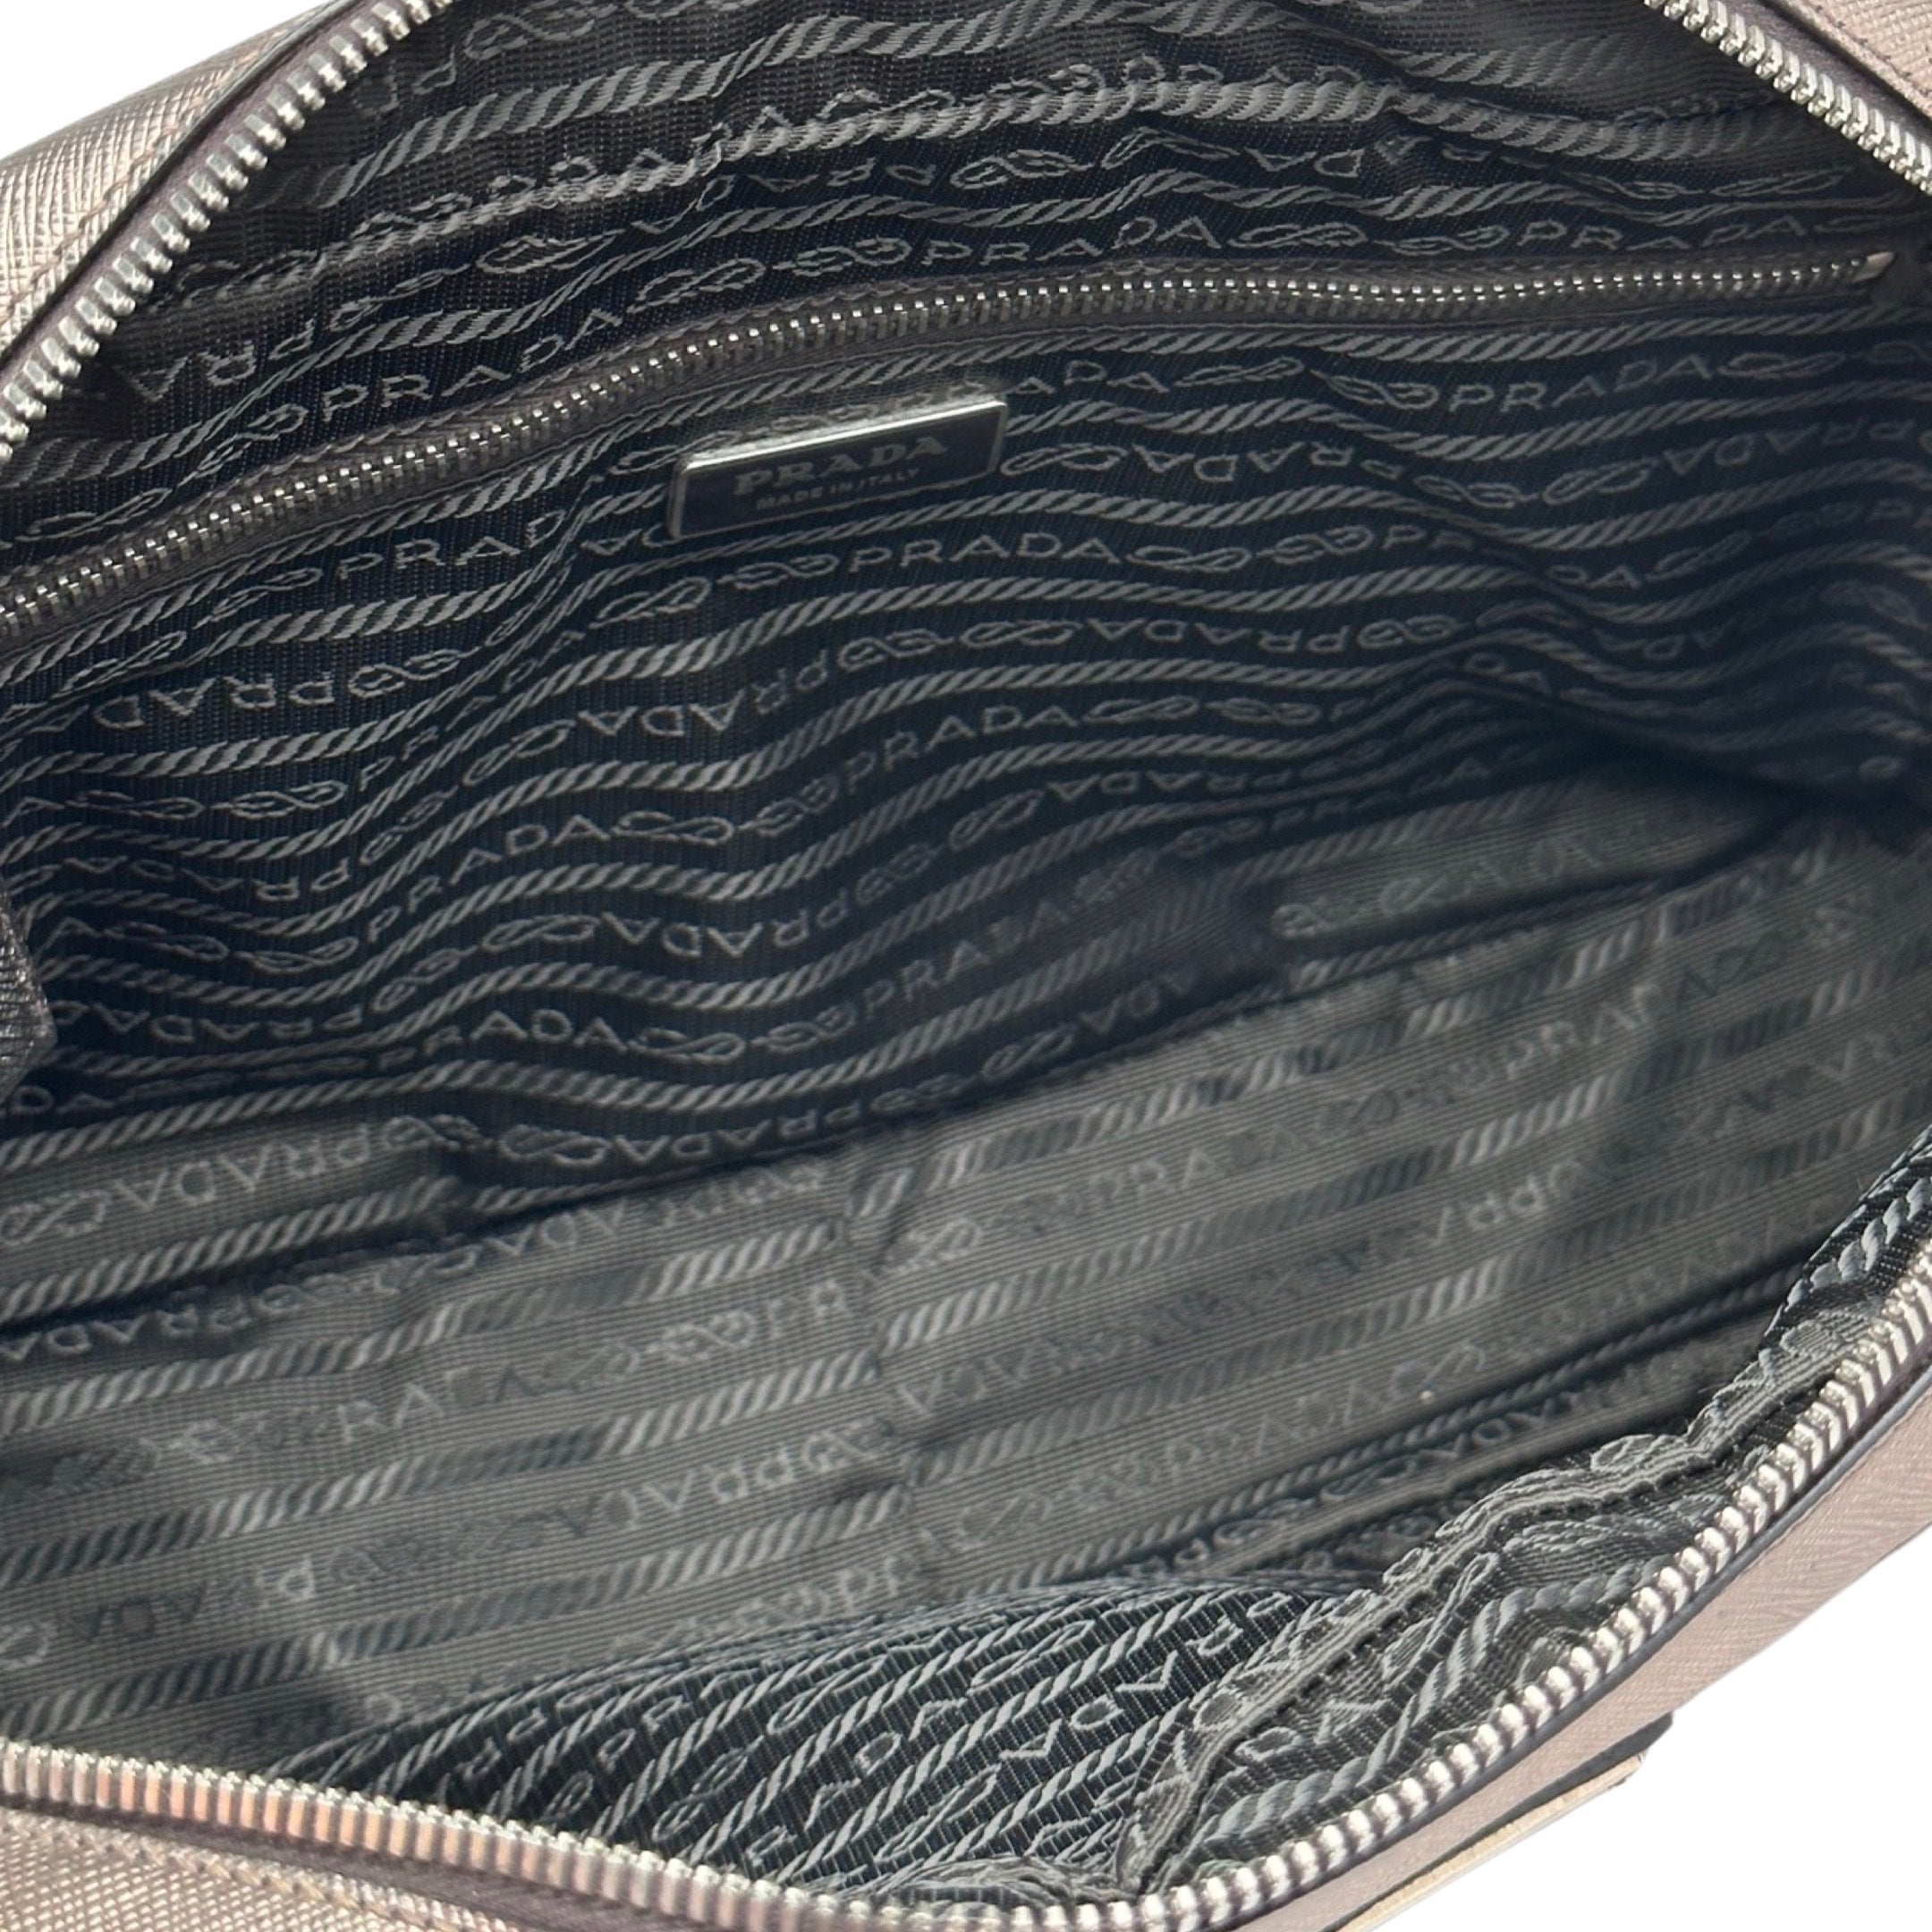 Prada Laptop Bag - Prada Saffiano Leather Laptop Bag